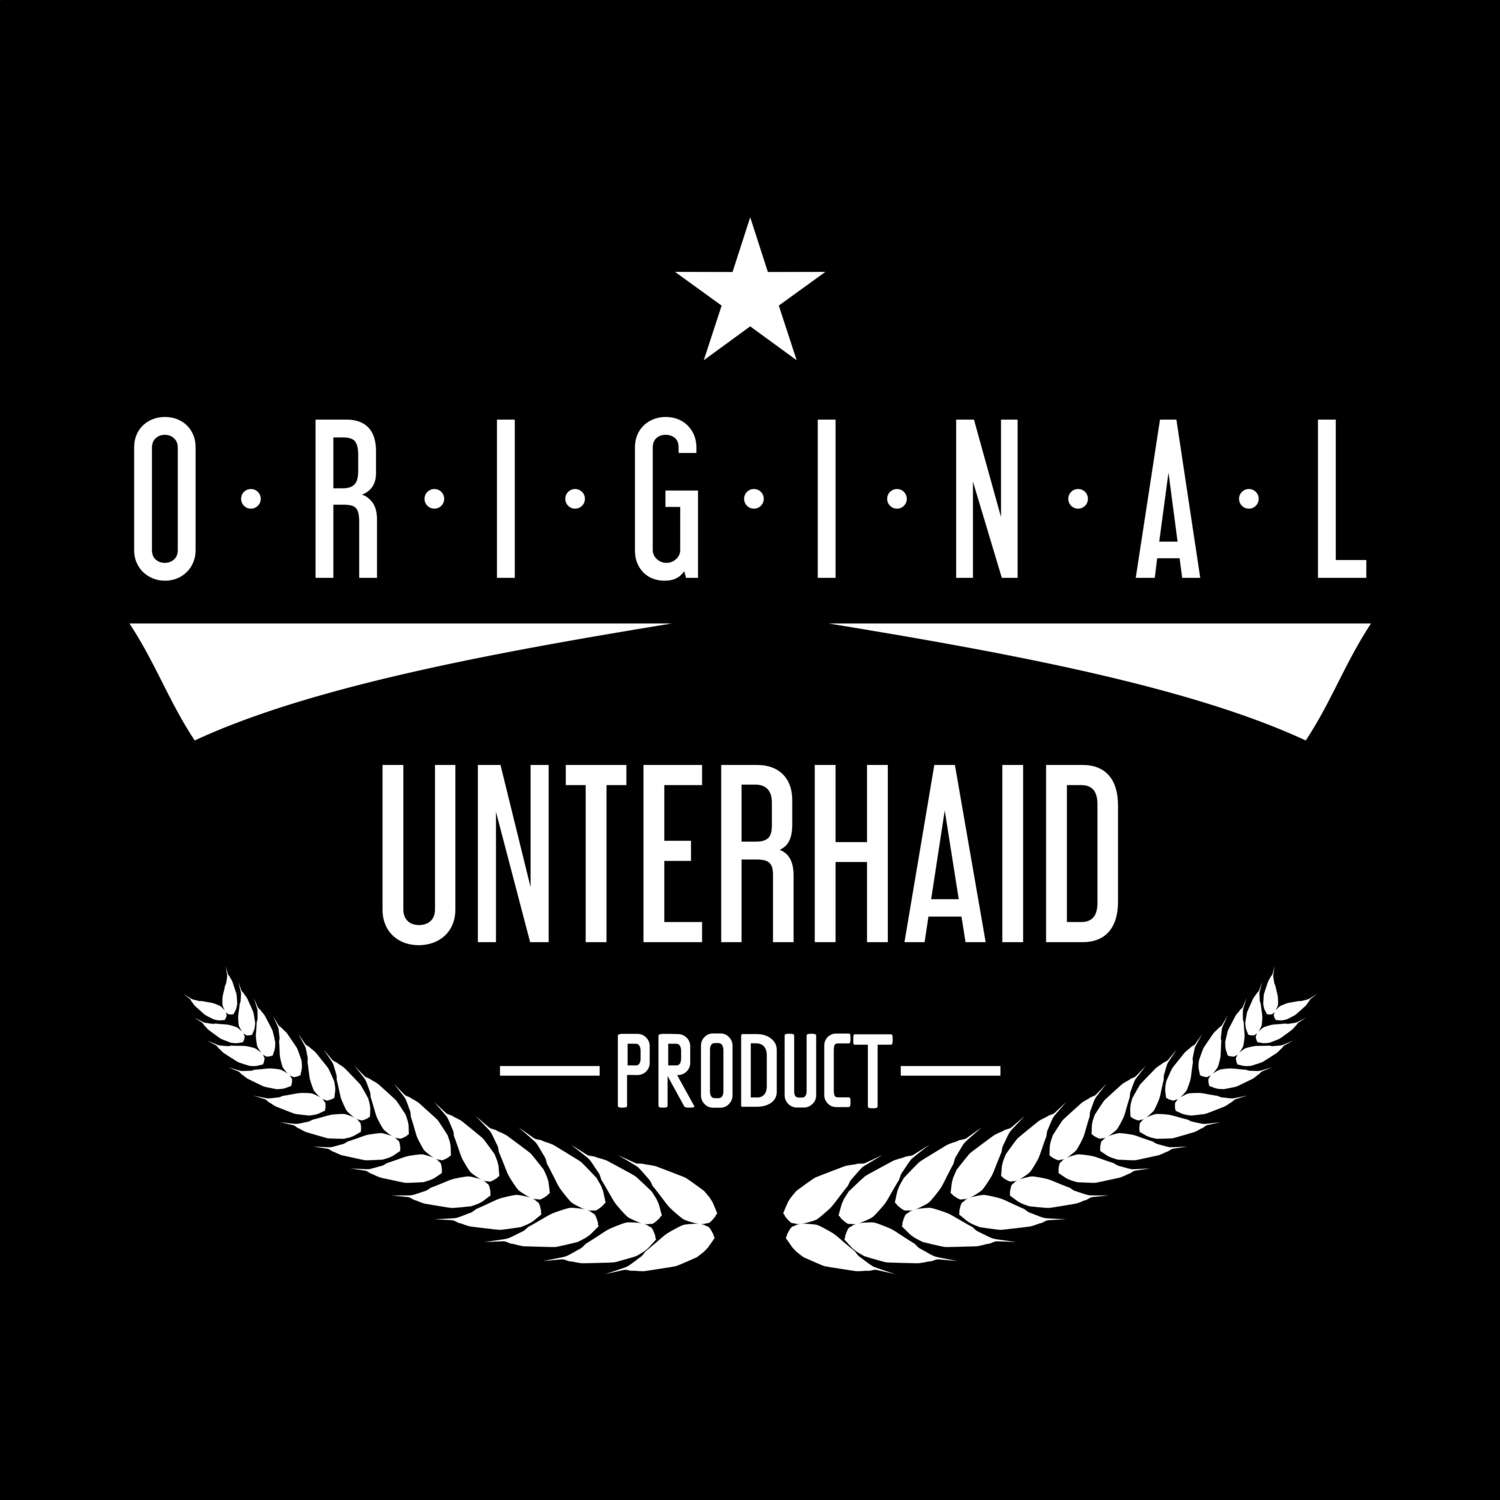 Unterhaid T-Shirt »Original Product«